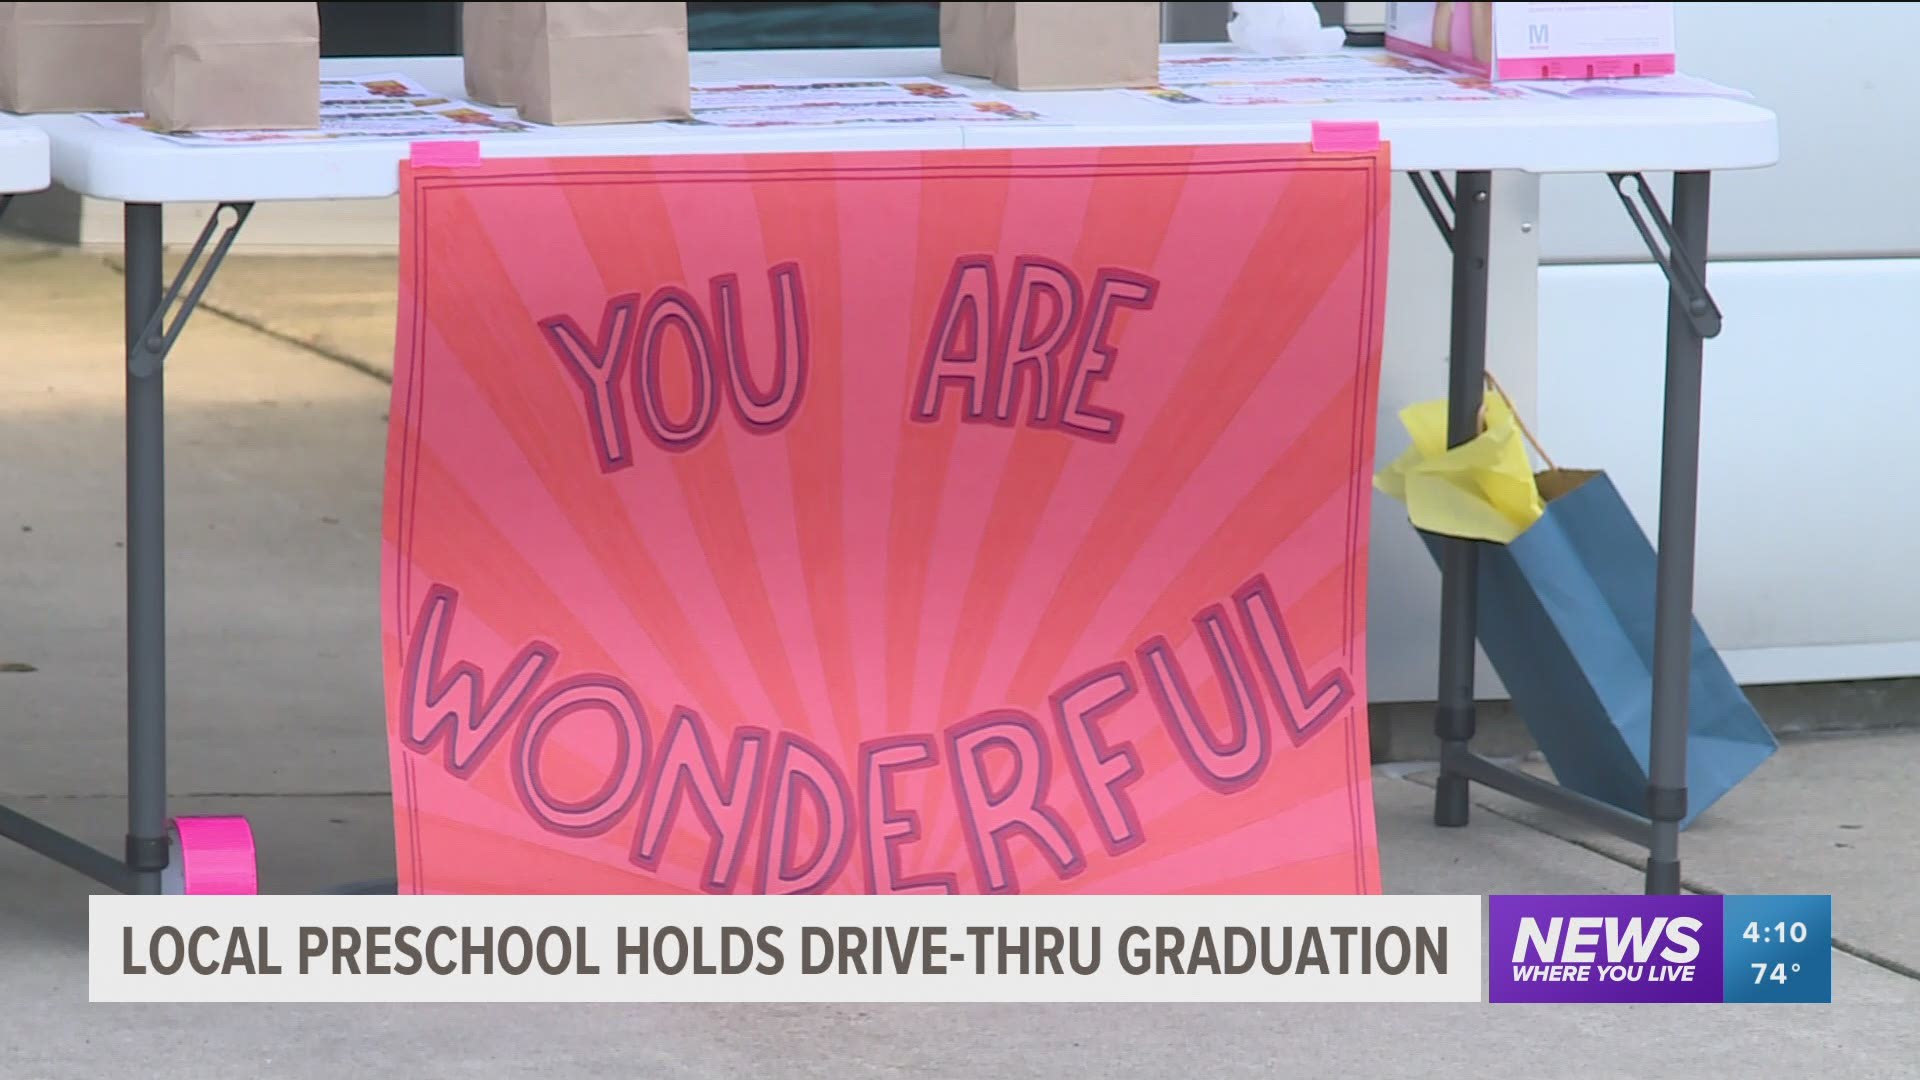 Local preschool holds drive-thru graduation